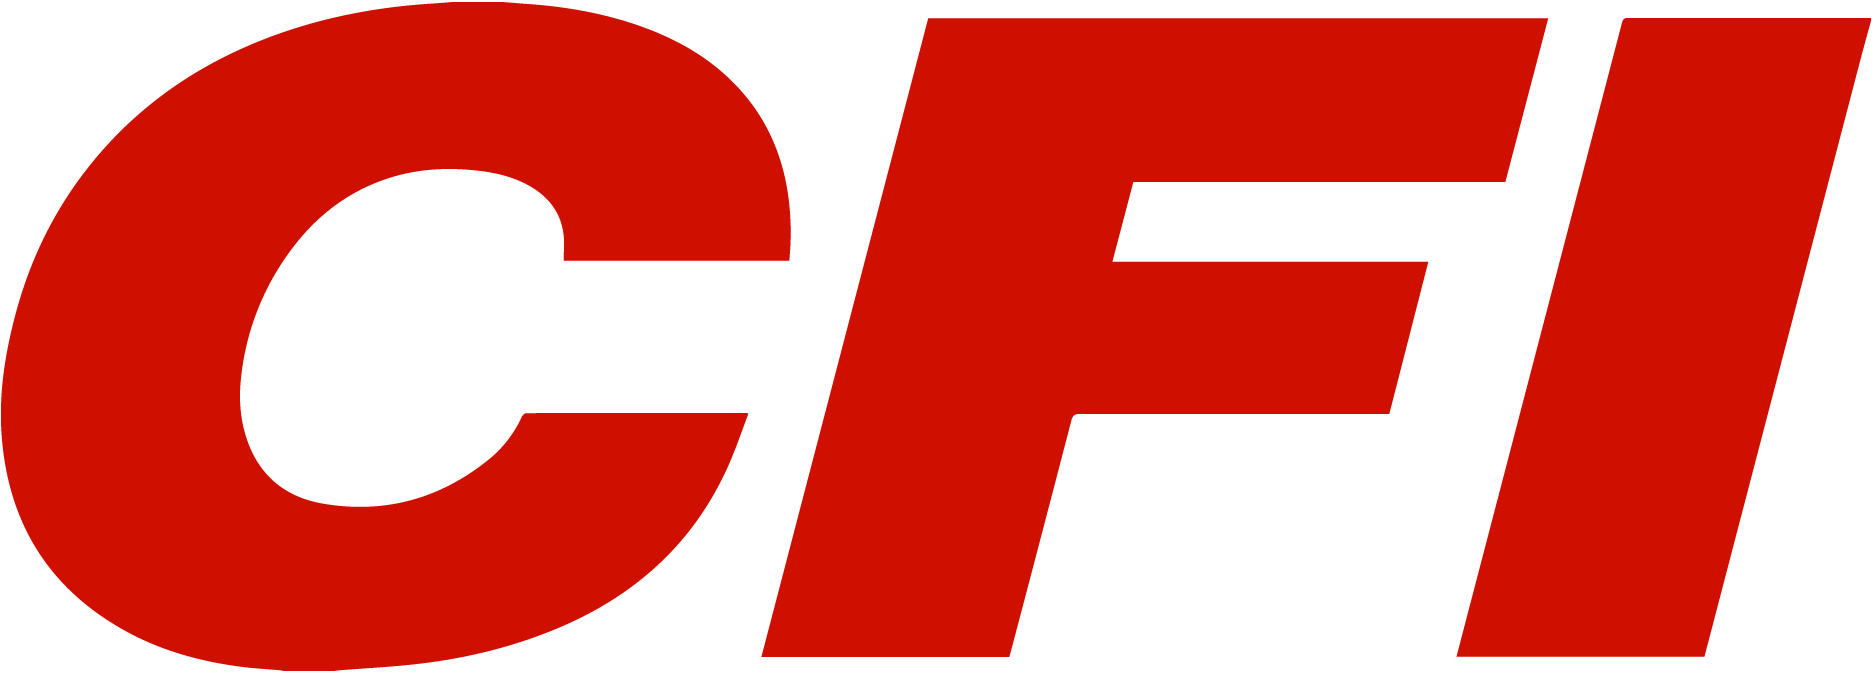 CFI owner operators logo